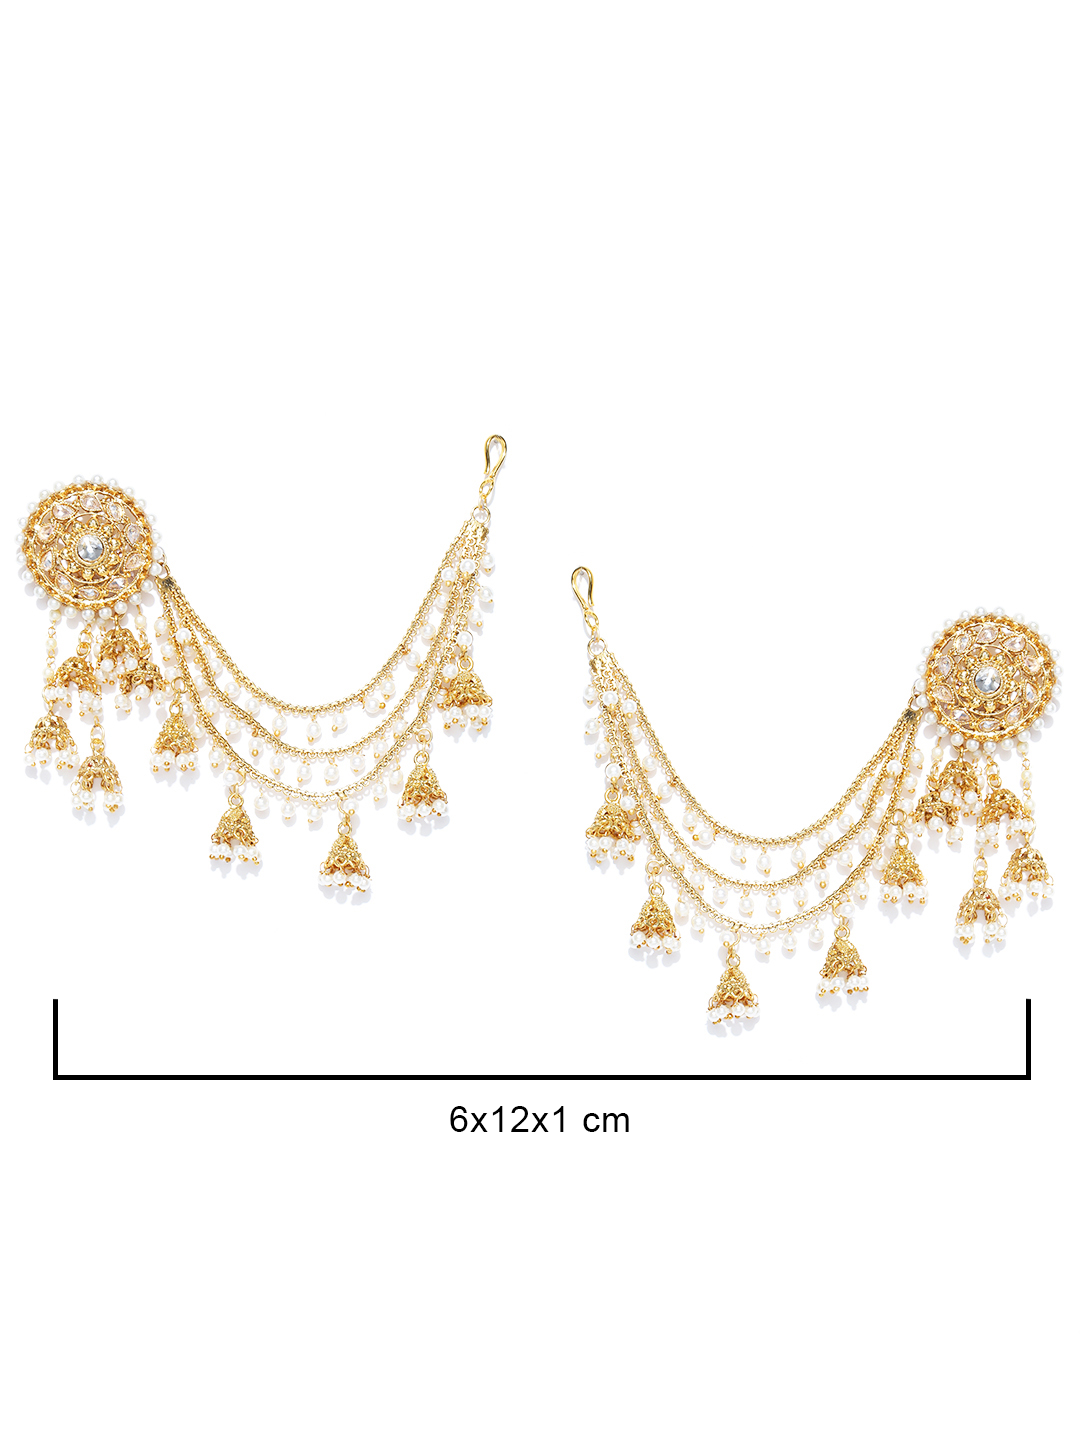 Light Weight Gold Earrings Designs | Gold Jhumka Earrings | Daily Party  Wear Gold Earrings | Gold earrings models, Simple gold earrings, Gold  earrings designs